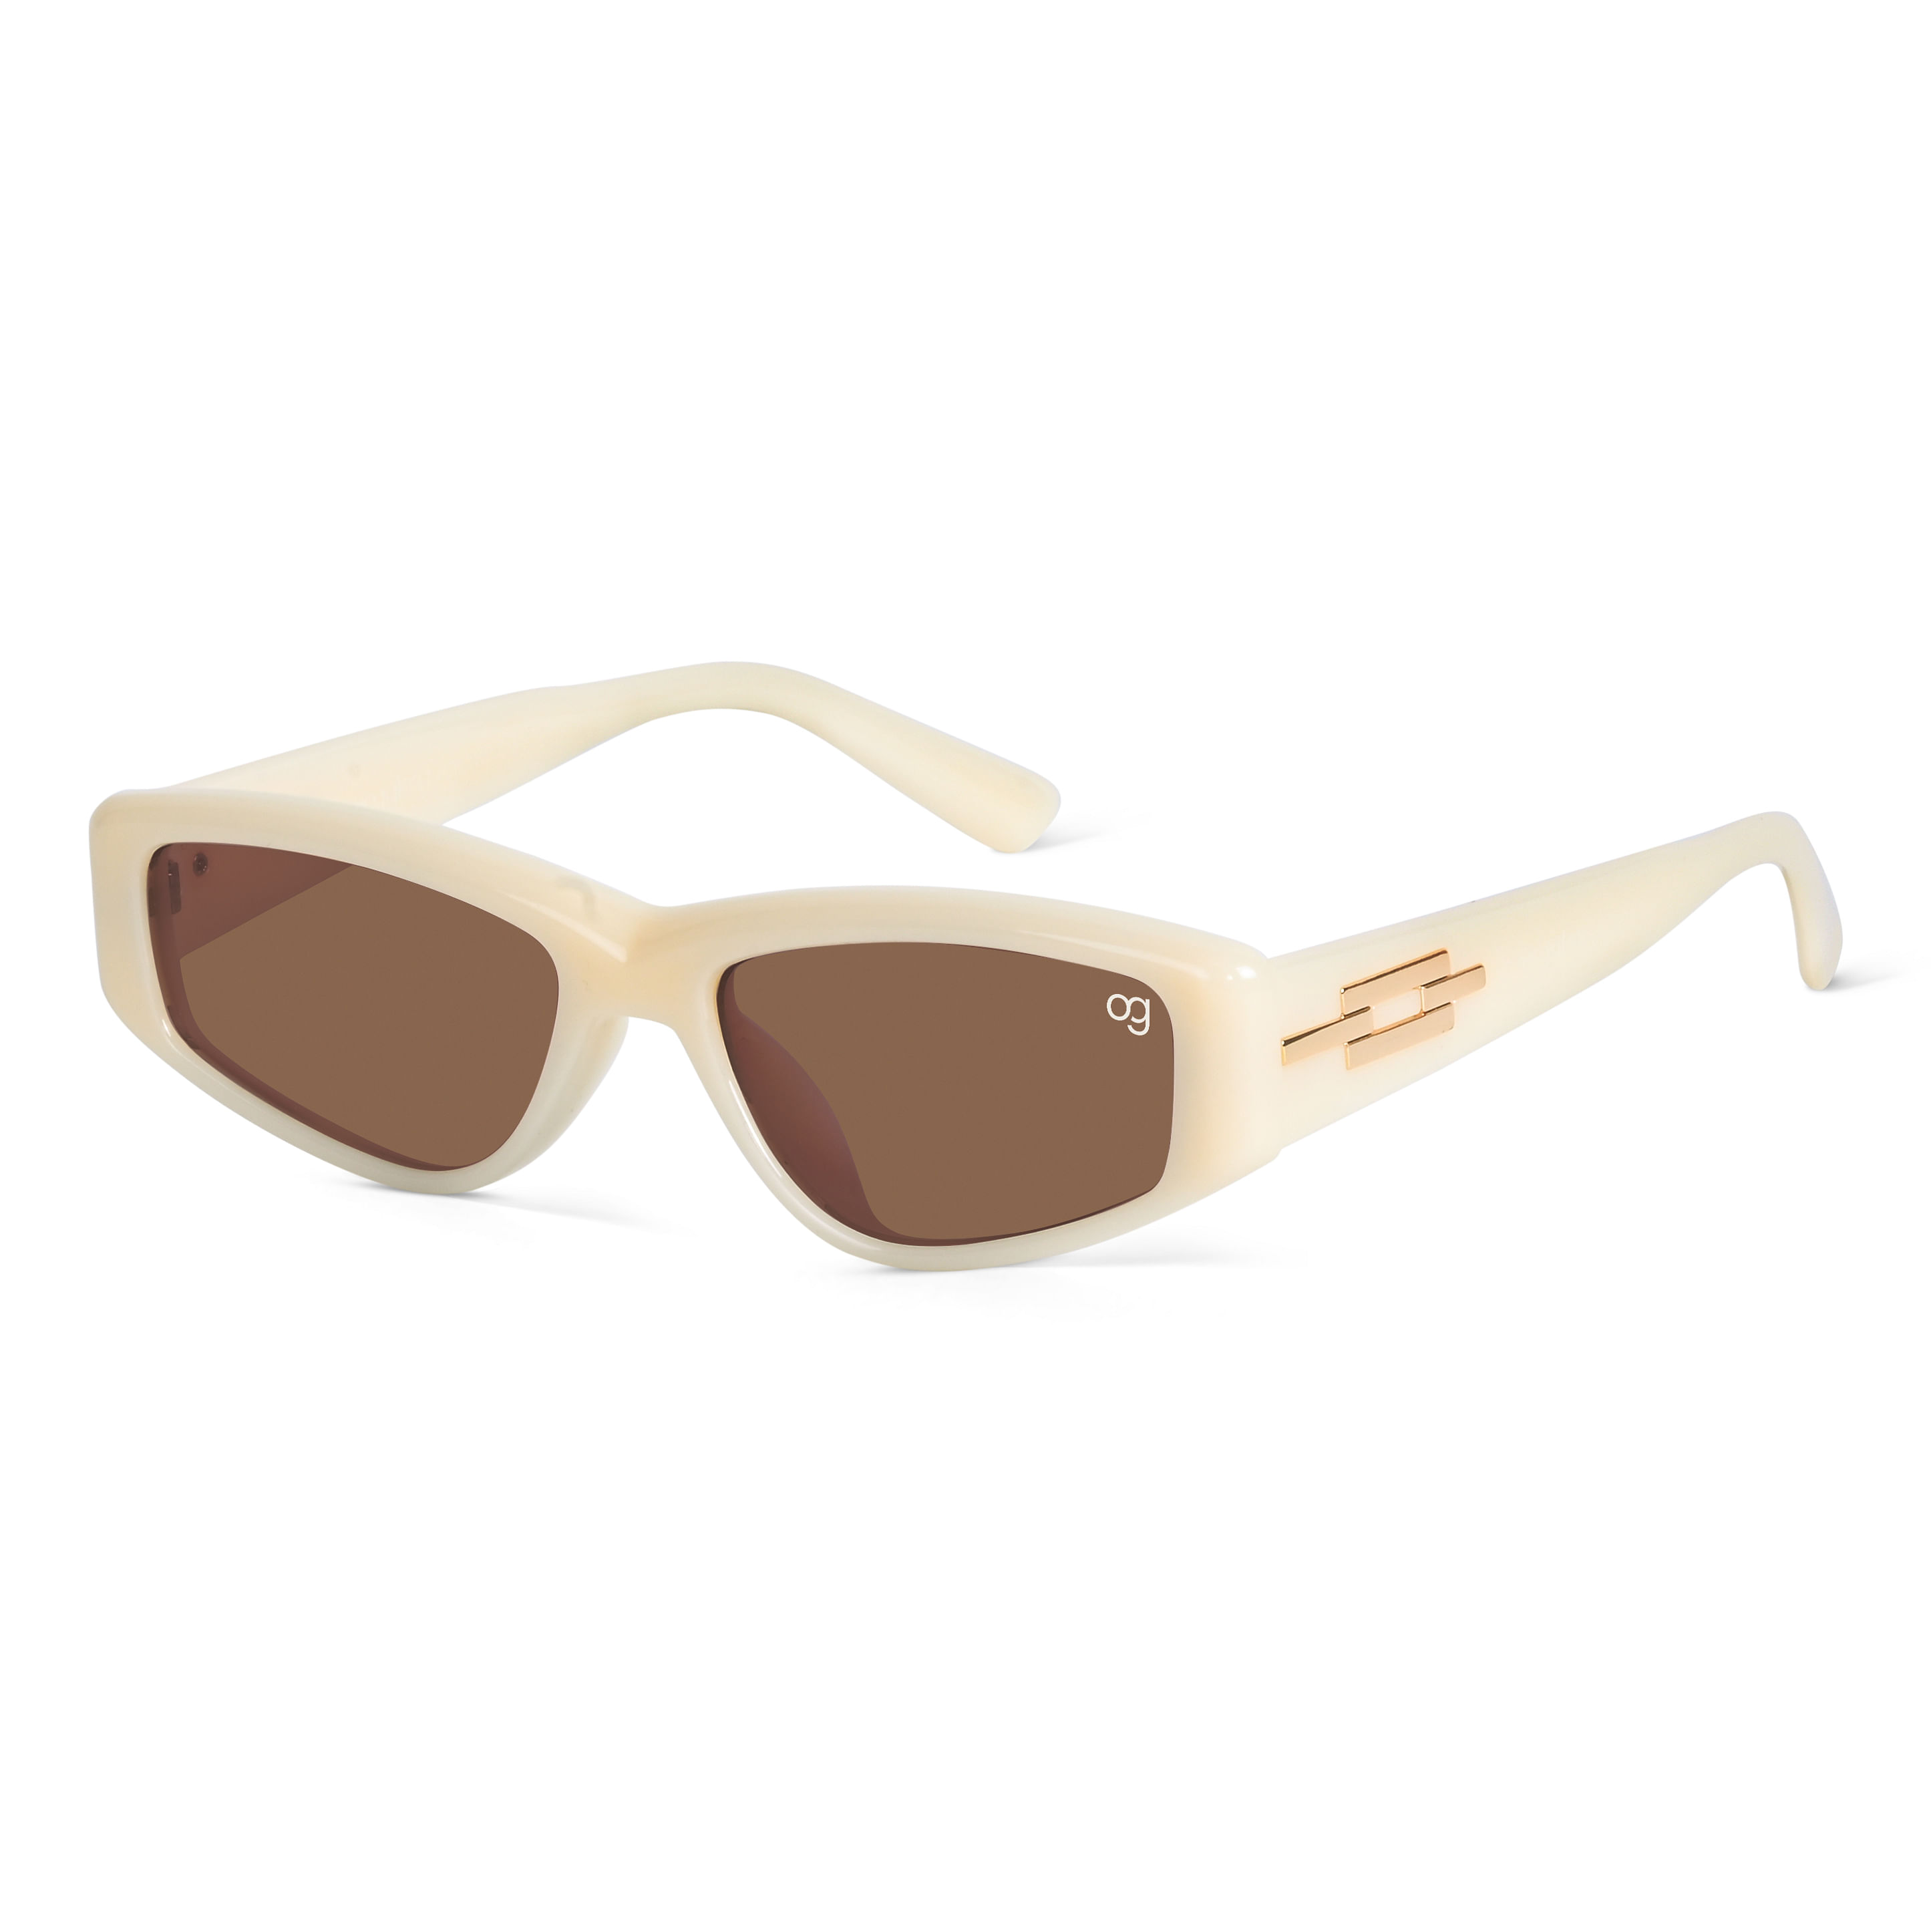 Brown Aviator Sunglasses – The Beach Company